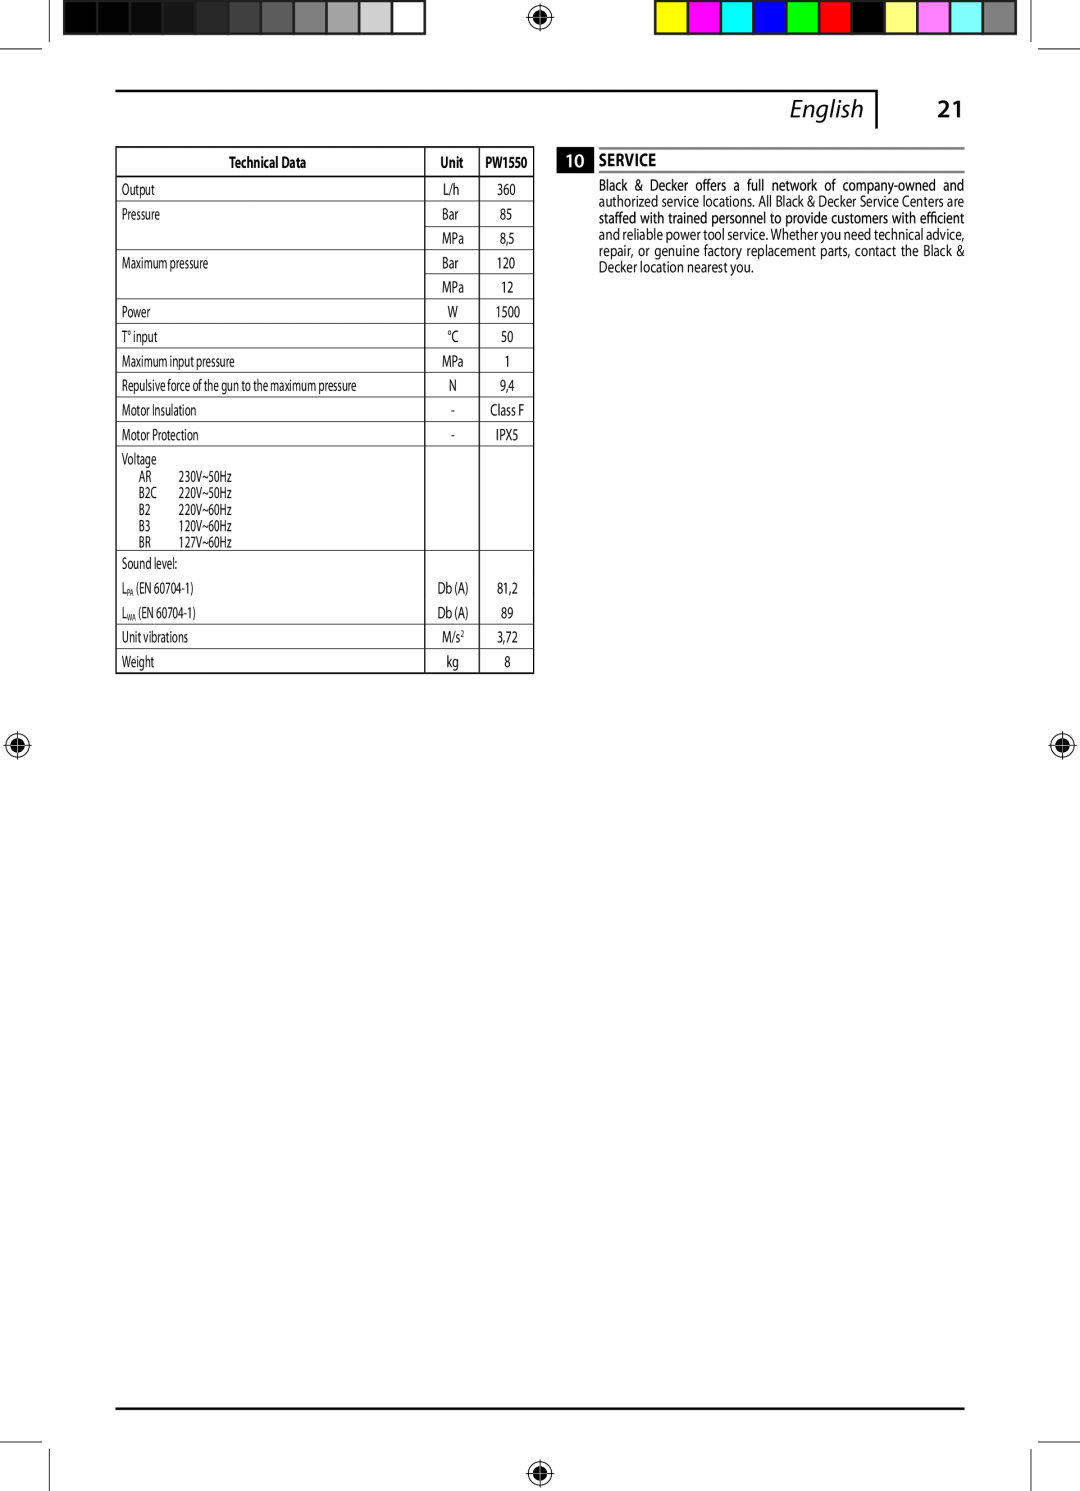 Black & Decker PW1550, 662275-02 instruction manual Service, English, Technical Data, Unit 